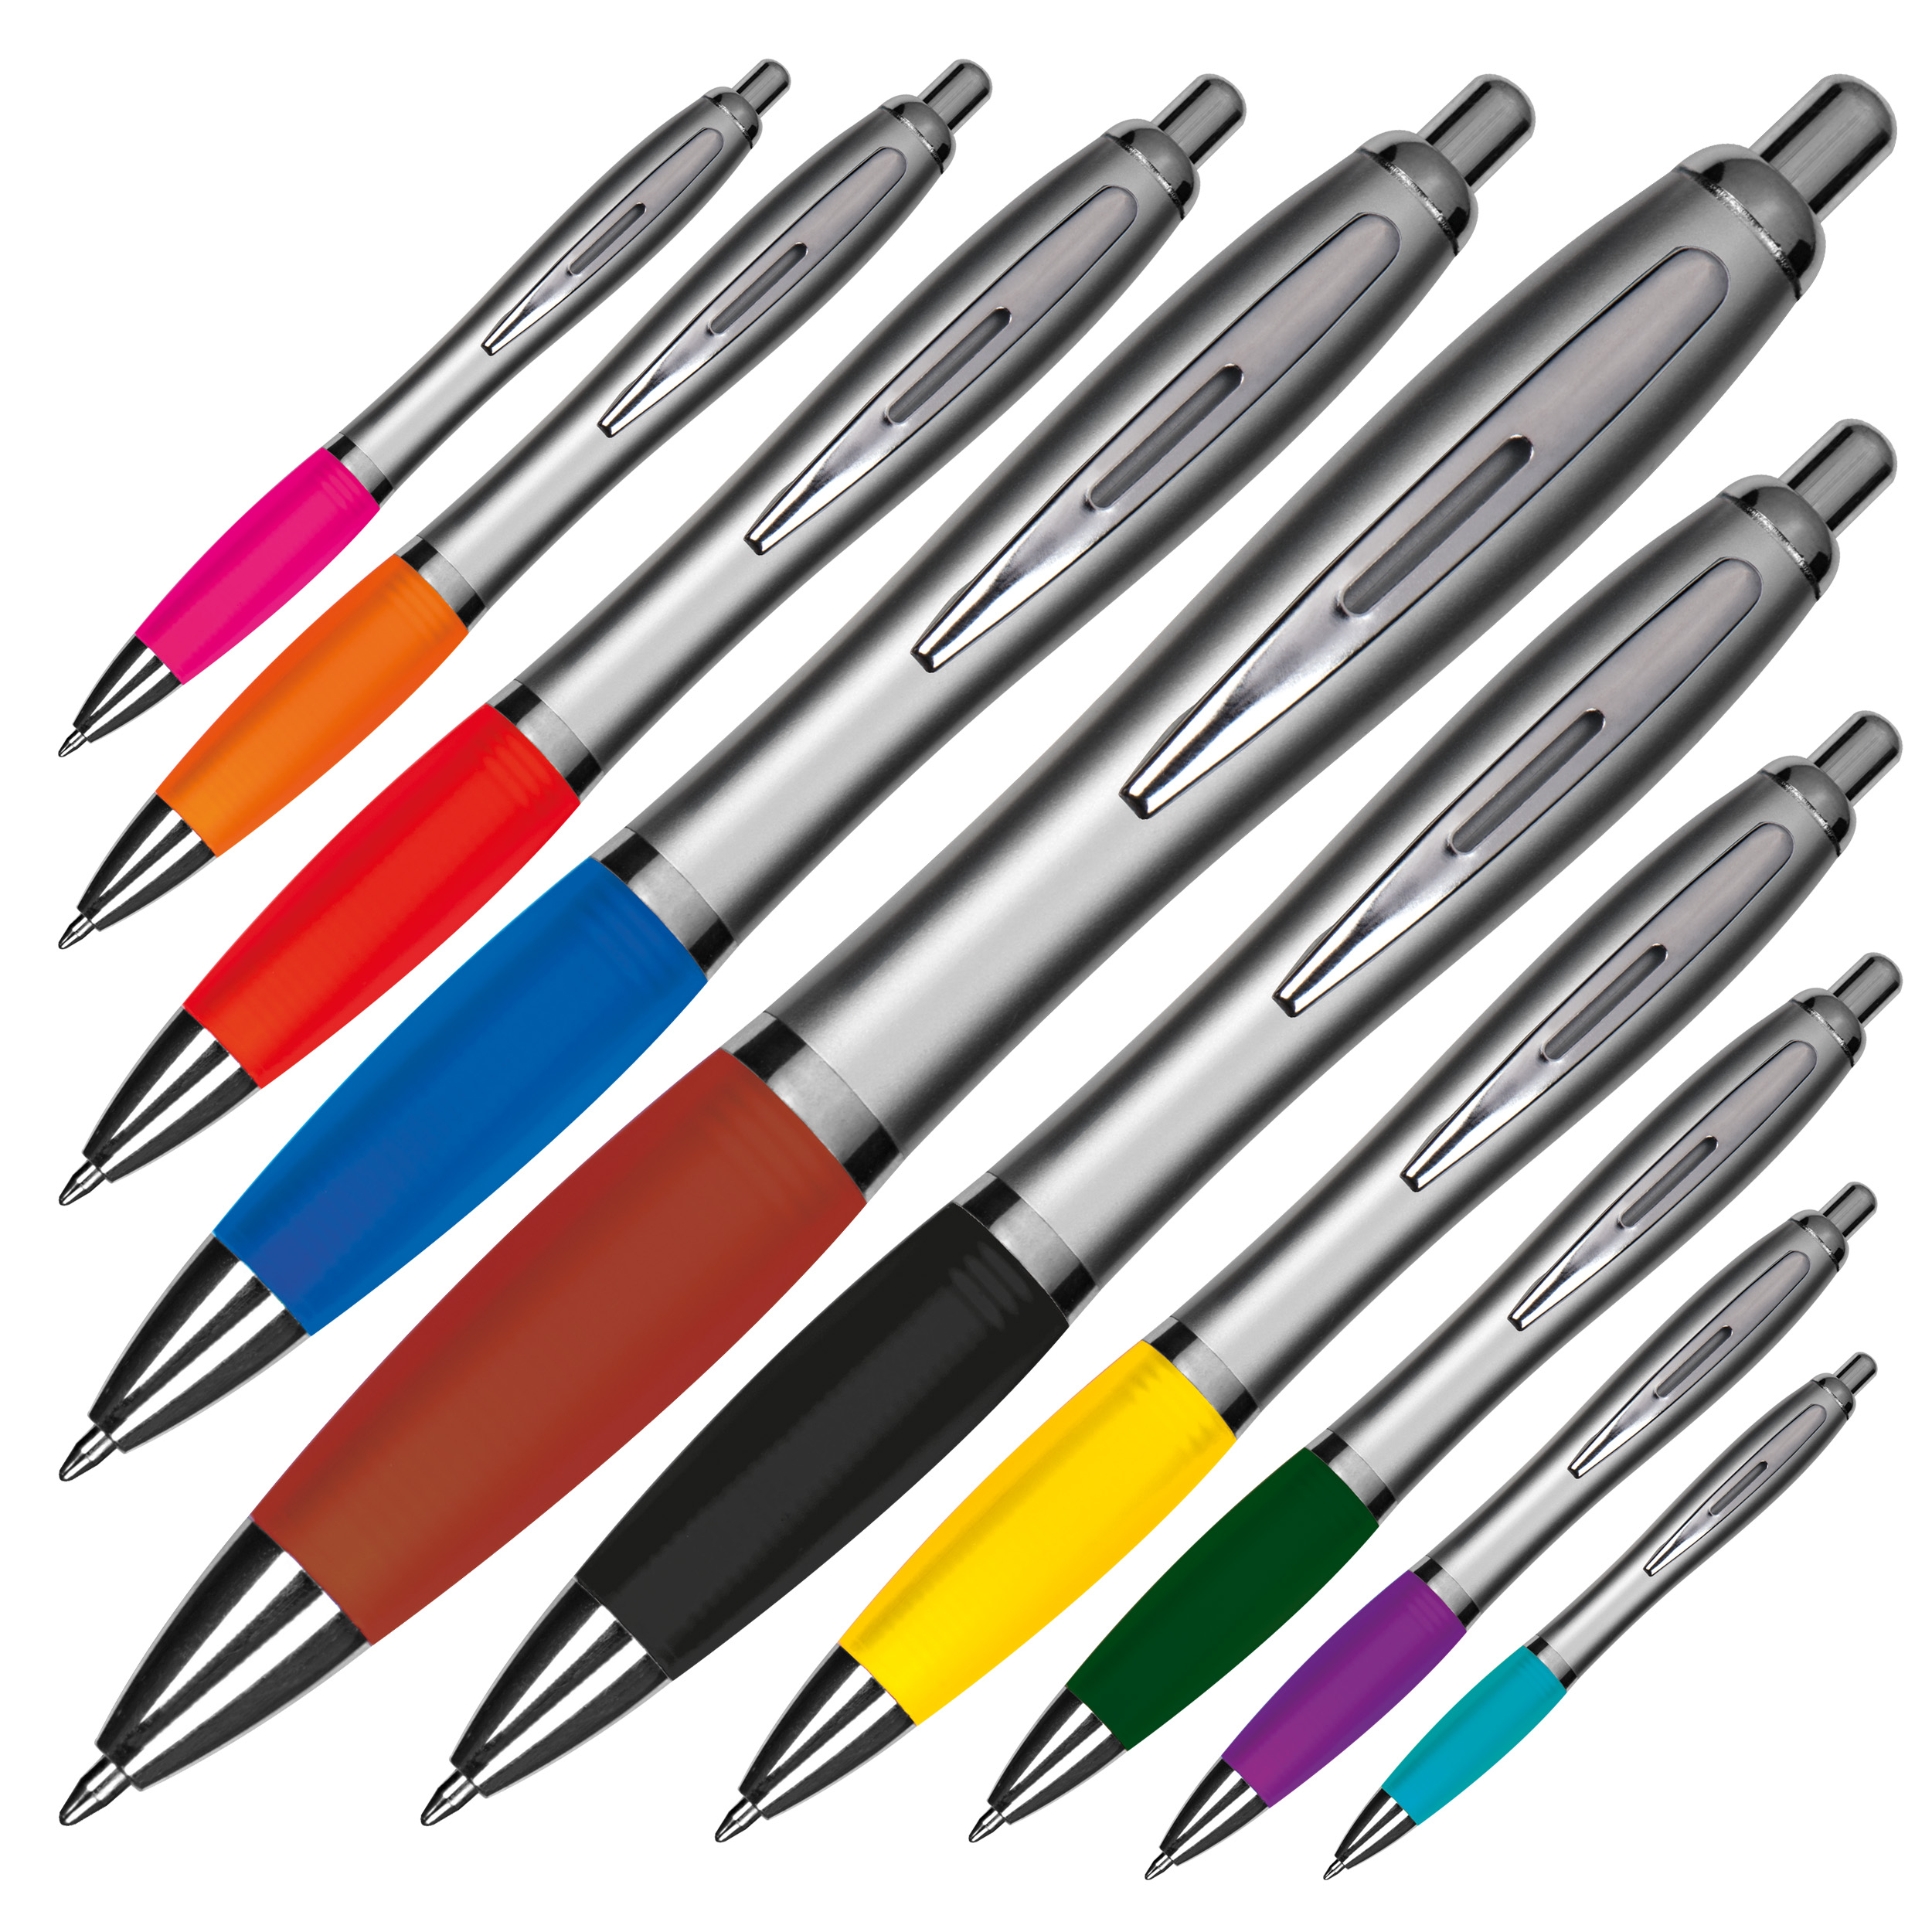 Kugelschreiber mit silbernem Schaft